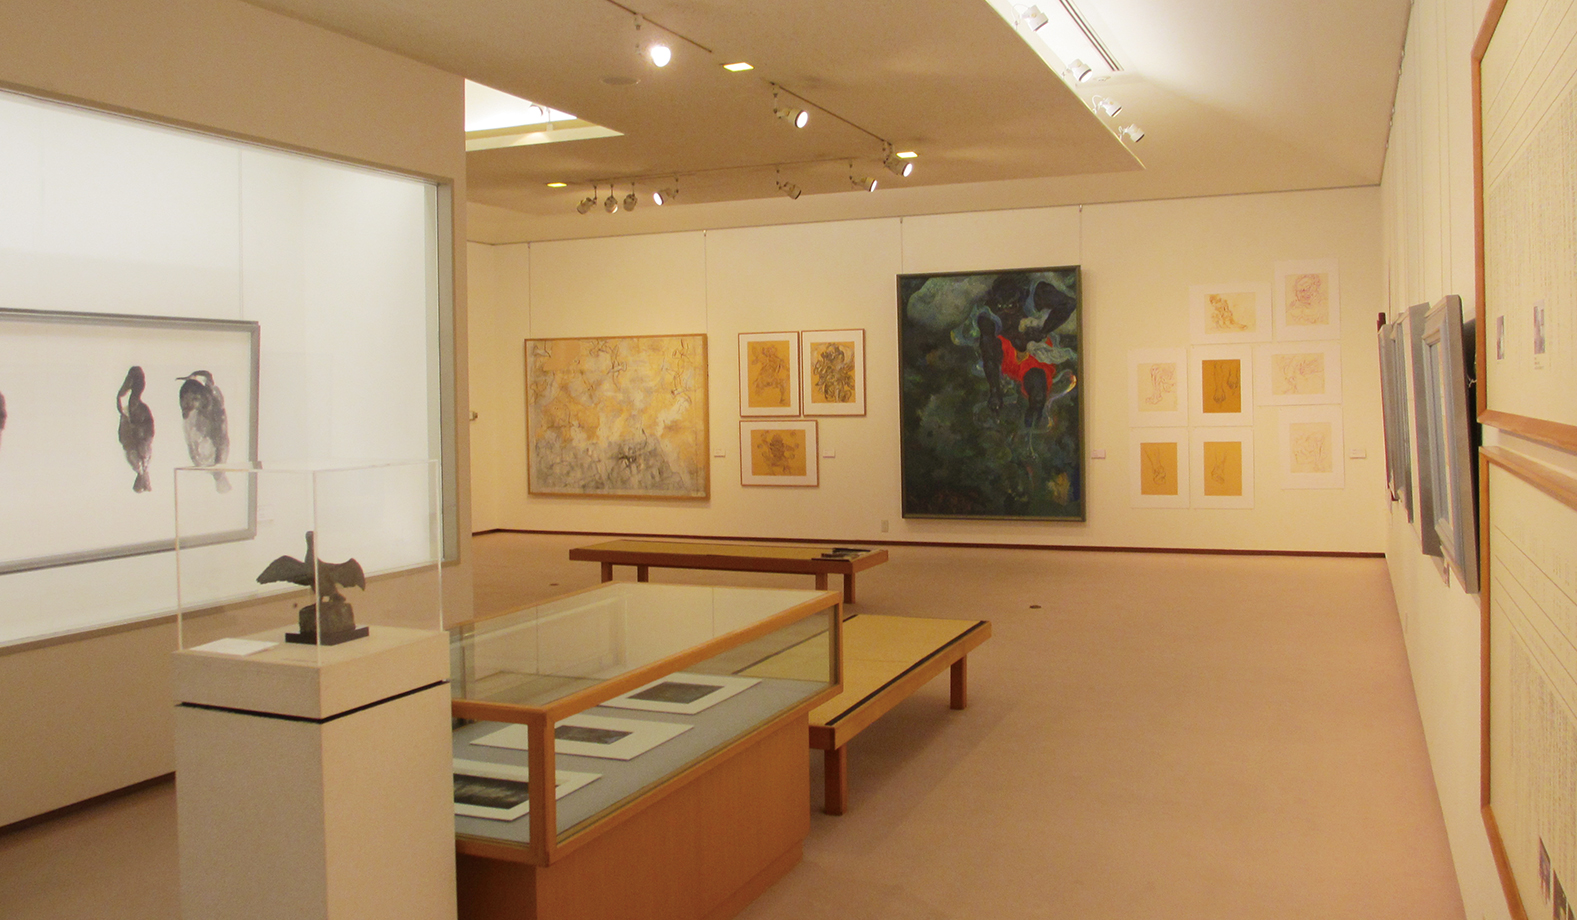 Scenes of exhibitions